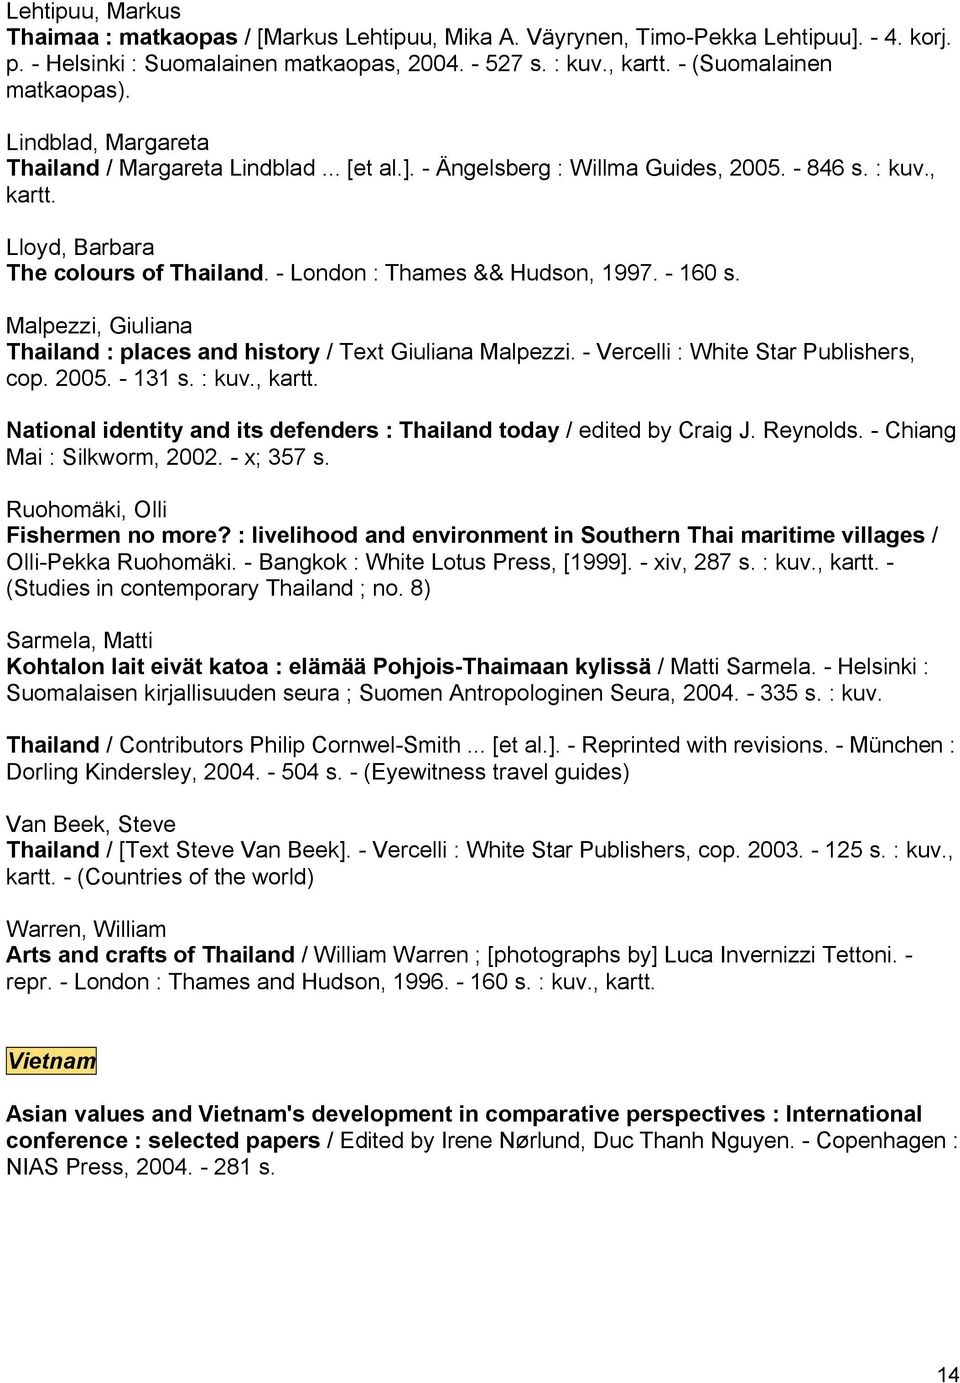 Malpezzi, Giuliana Thailand : places and history / Text Giuliana Malpezzi. Vercelli : White Star Publishers, cop. 2005. 131 s. : kuv., kartt.